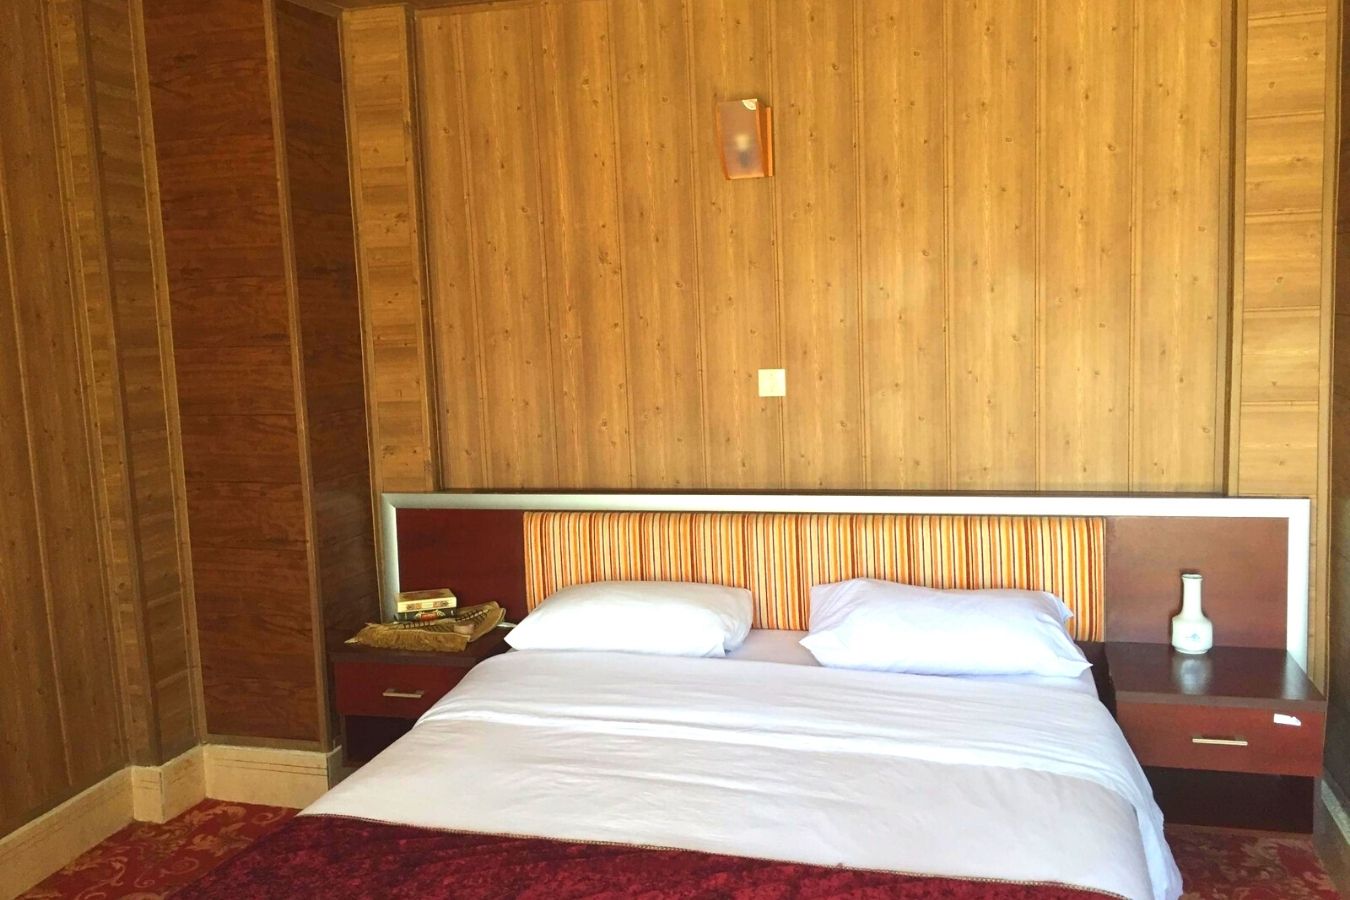 Delvar Hotel's double room